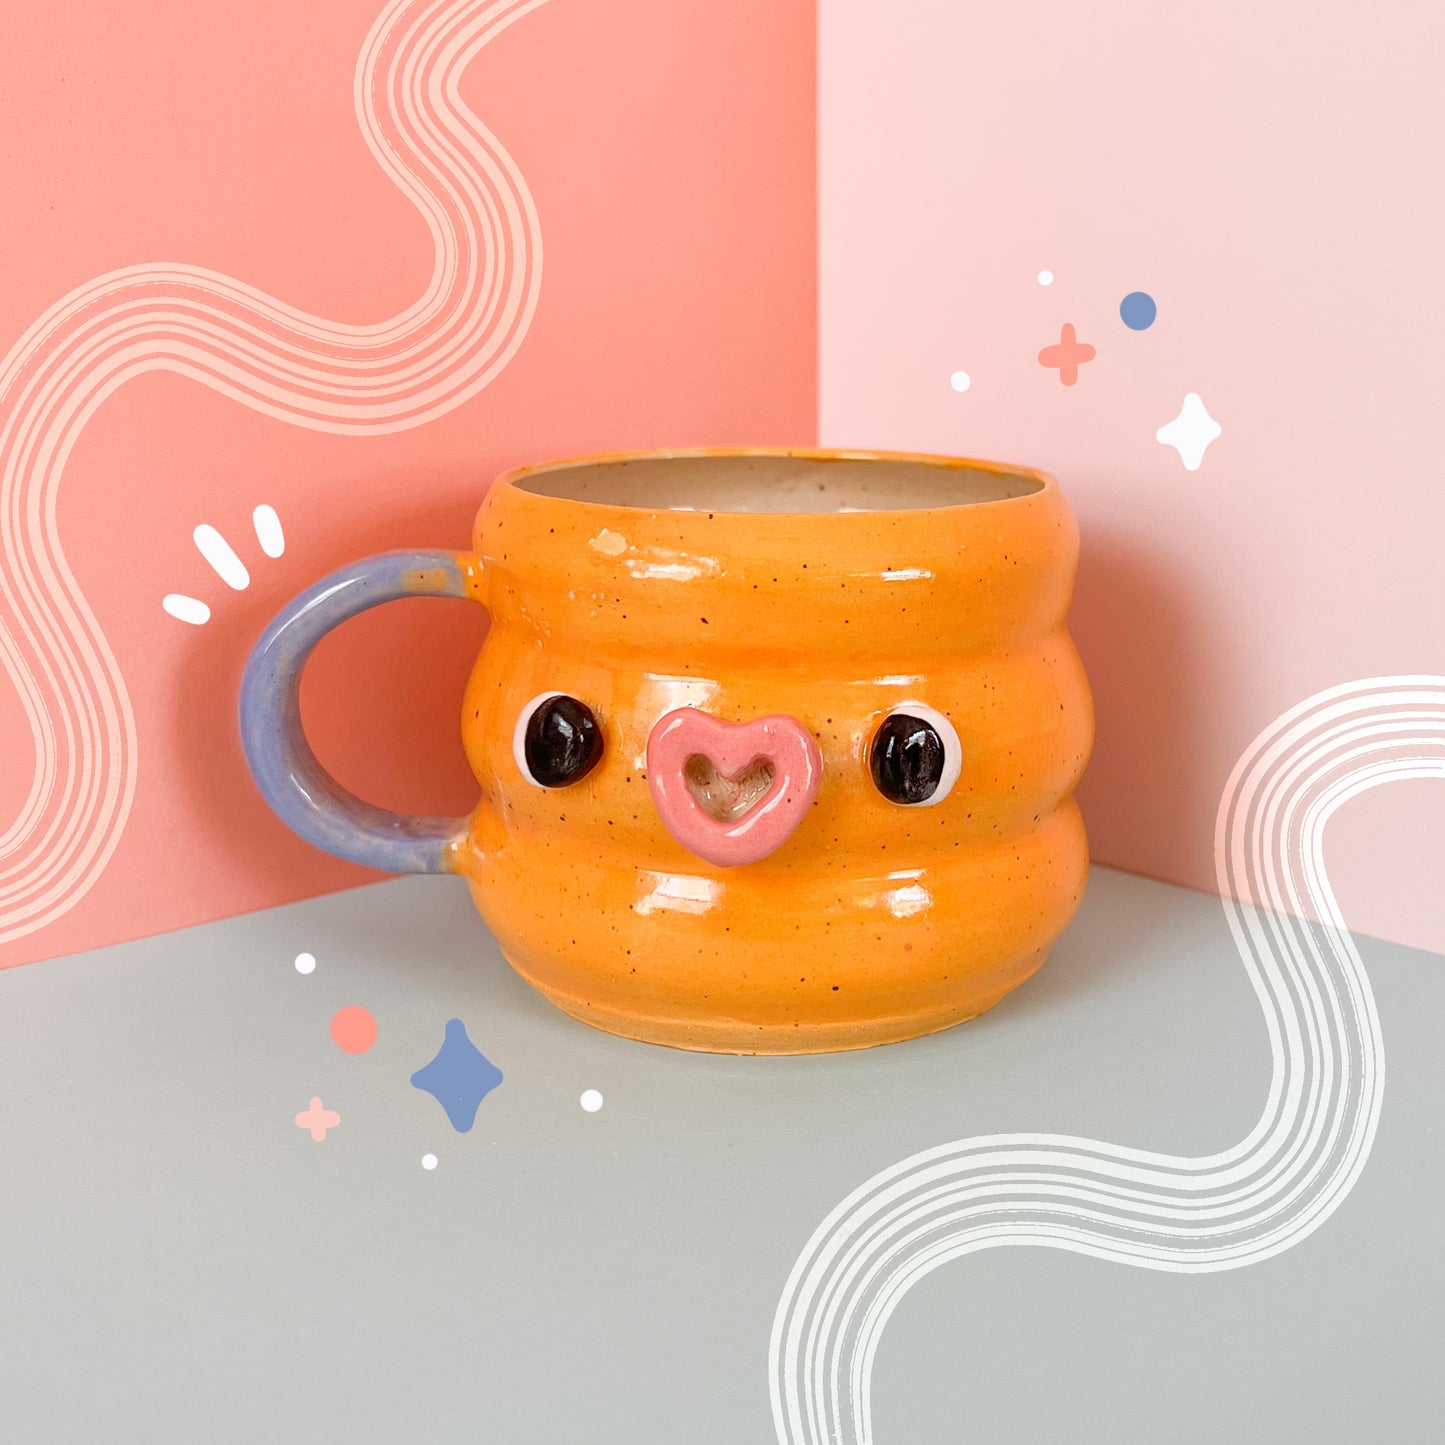 Golden squiggle mug